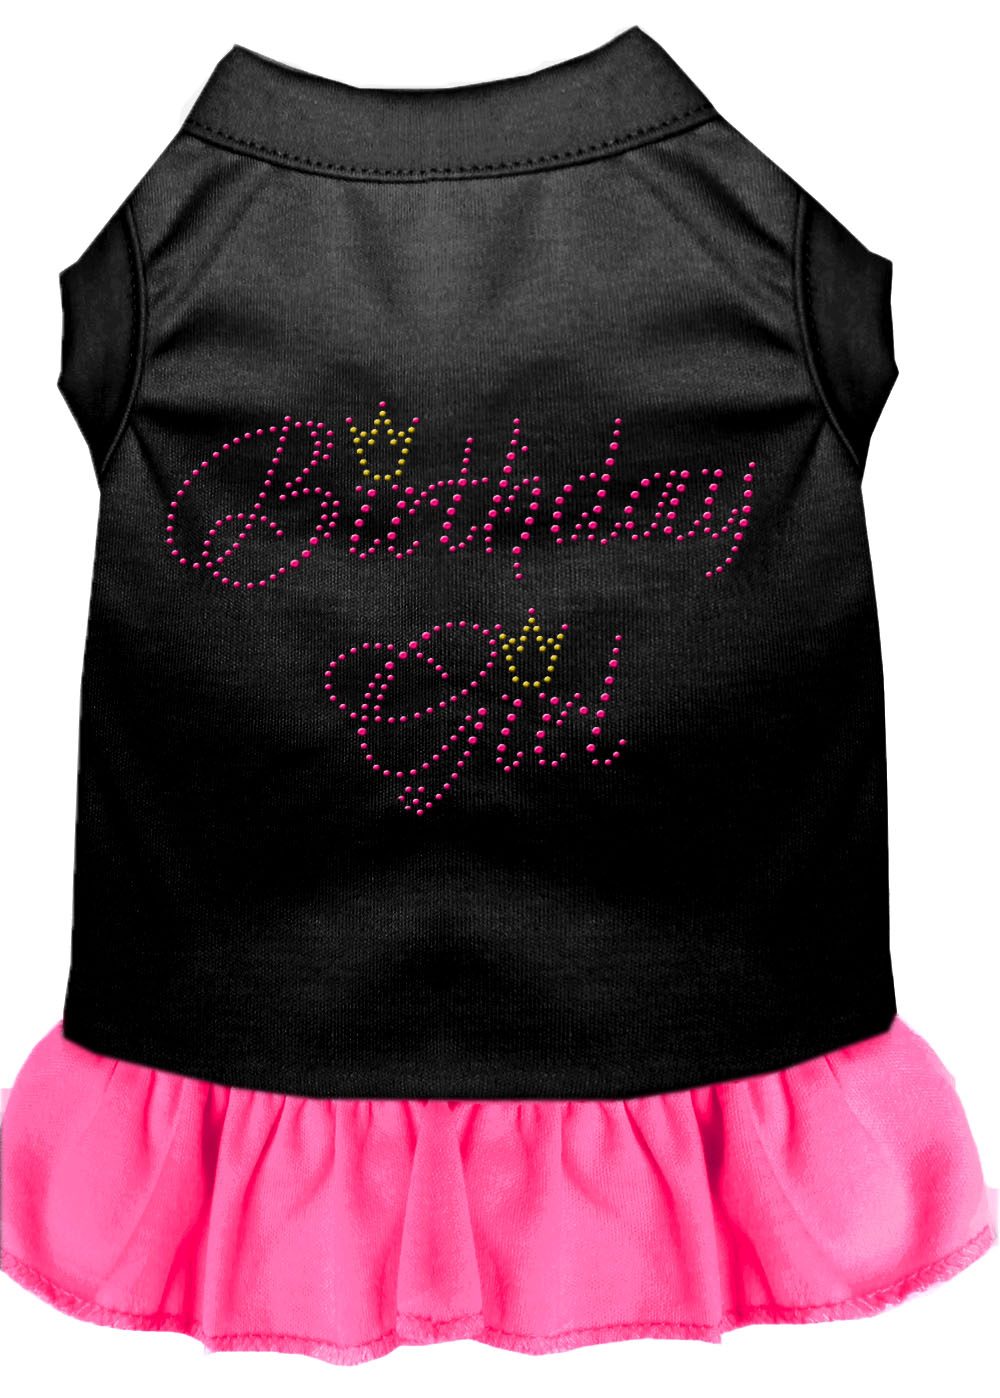 Birthday Girl Rhinestone Dress Black with Bright Pink Sm